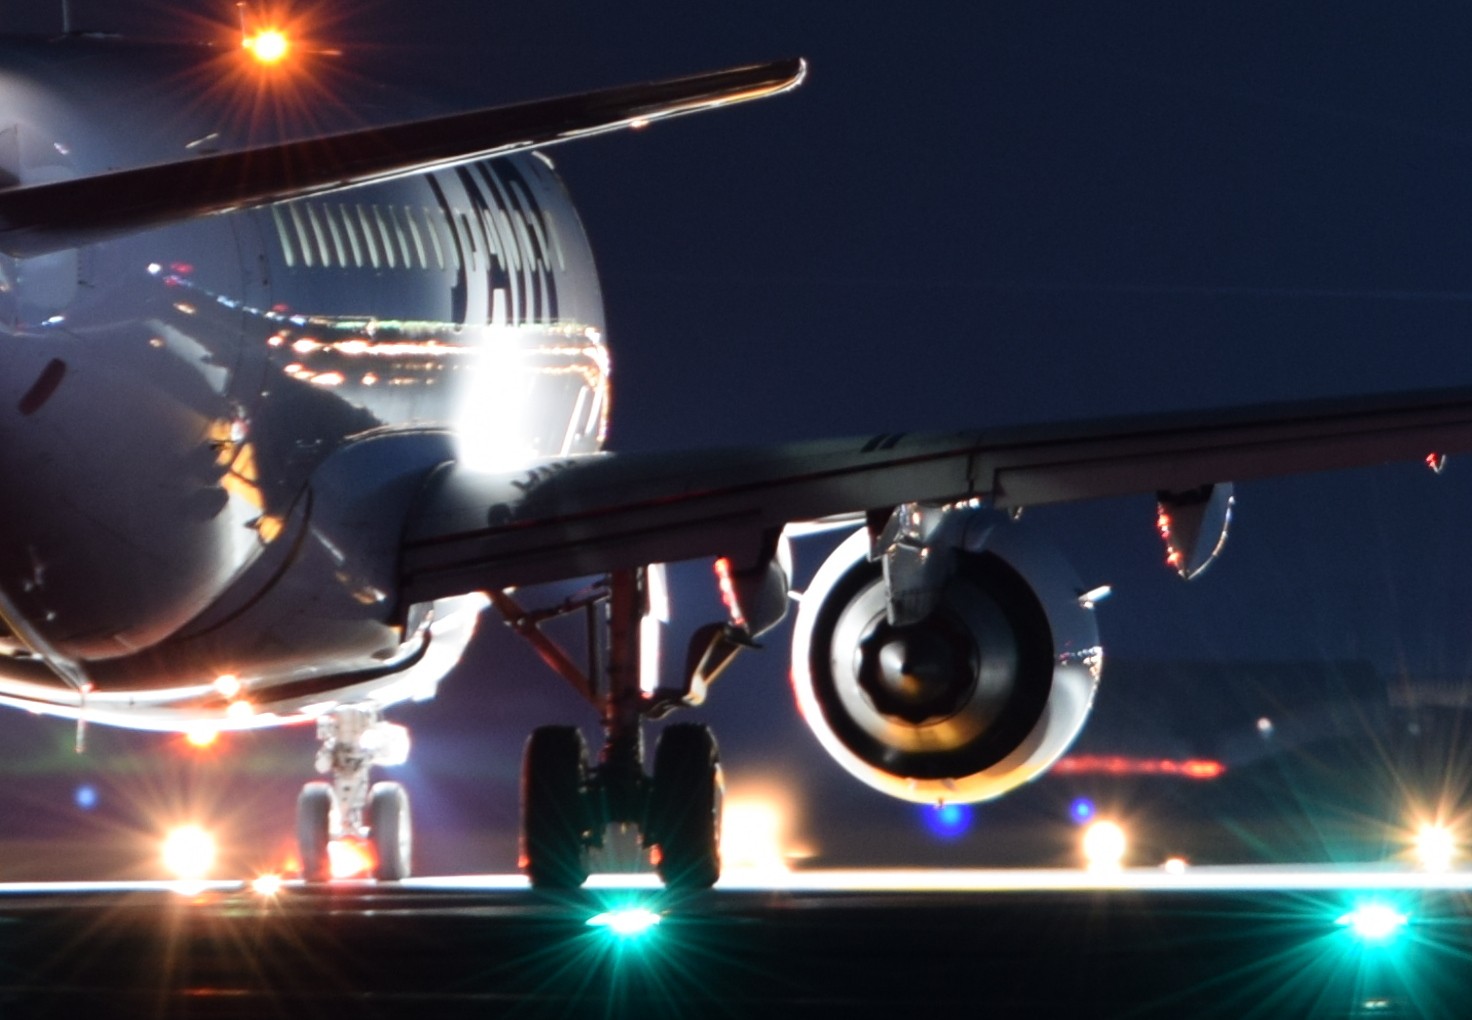 7u4 サイズ 空港での飛行機写真 夜景 オシャレなポスター Iichi ハンドメイド クラフト作品 手仕事品の通販